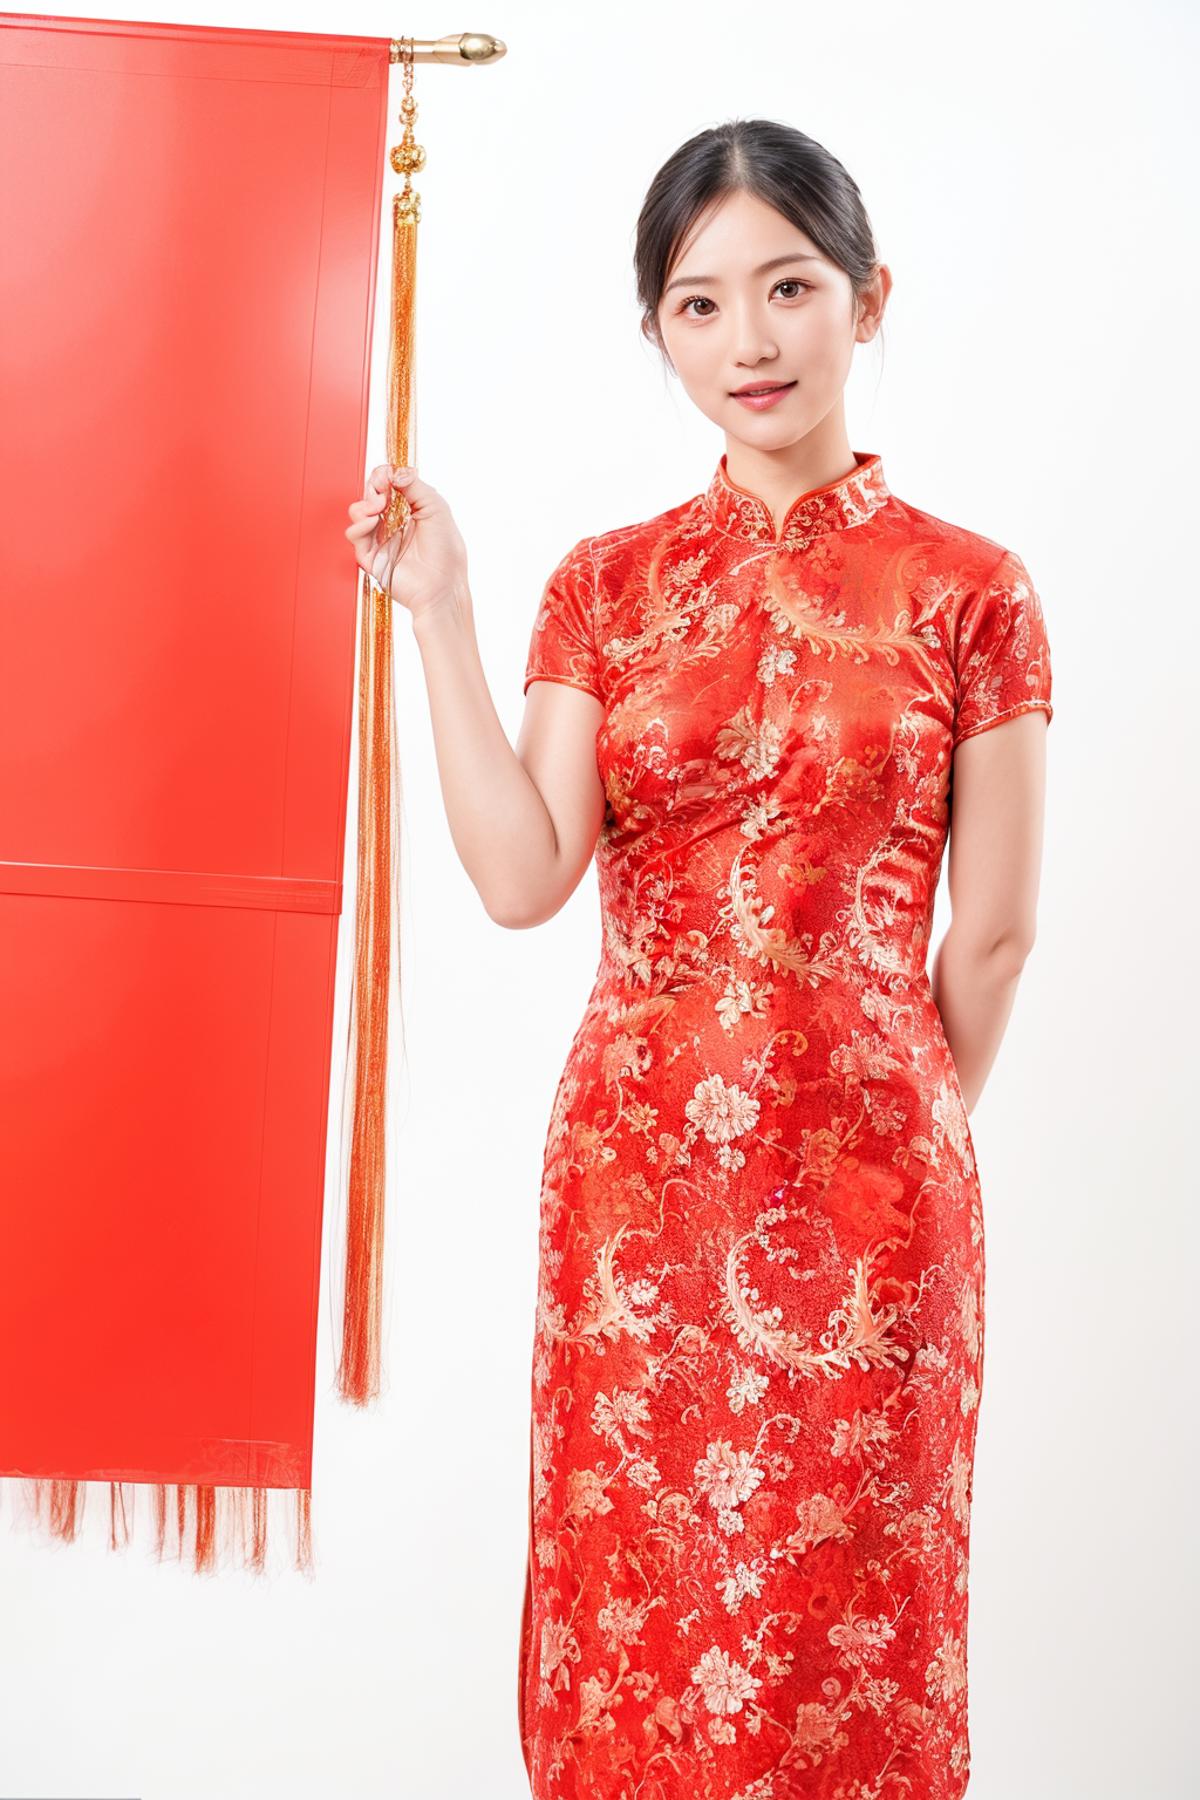 【Realistic】红色 新年 旗袍 China Dress / Cheongsam / Qipao / New Year/Chinese New Year/Spring Festival image by EmptyBellPainter